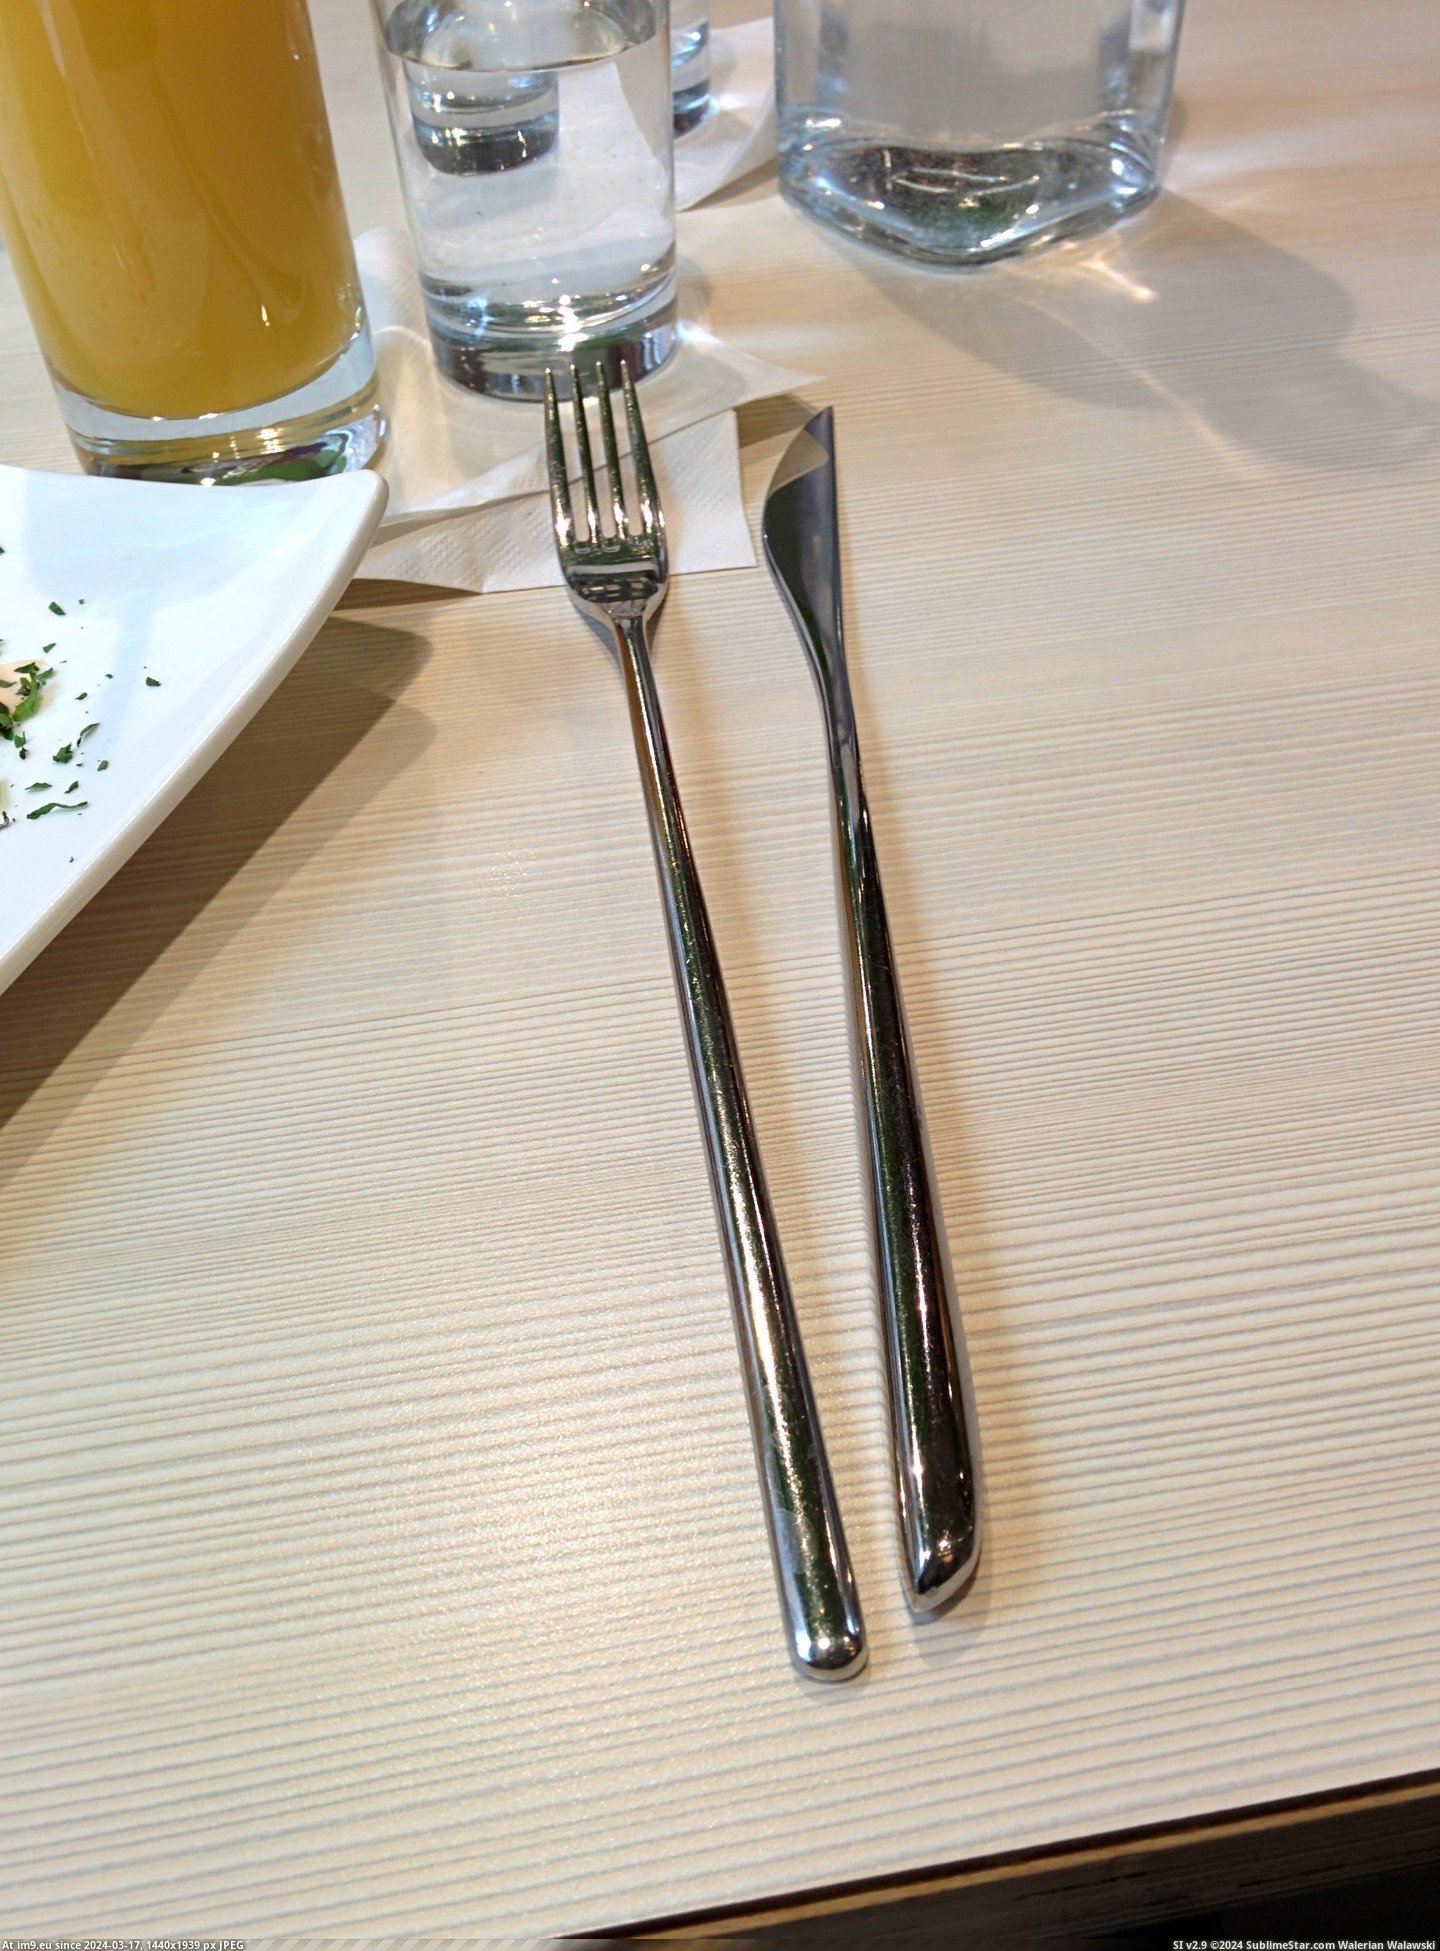 #Restaurant #Knife #Fork #Awkward [Mildlyinteresting] The fork and knife at this restaurant are very awkward Pic. (Изображение из альбом My r/MILDLYINTERESTING favs))